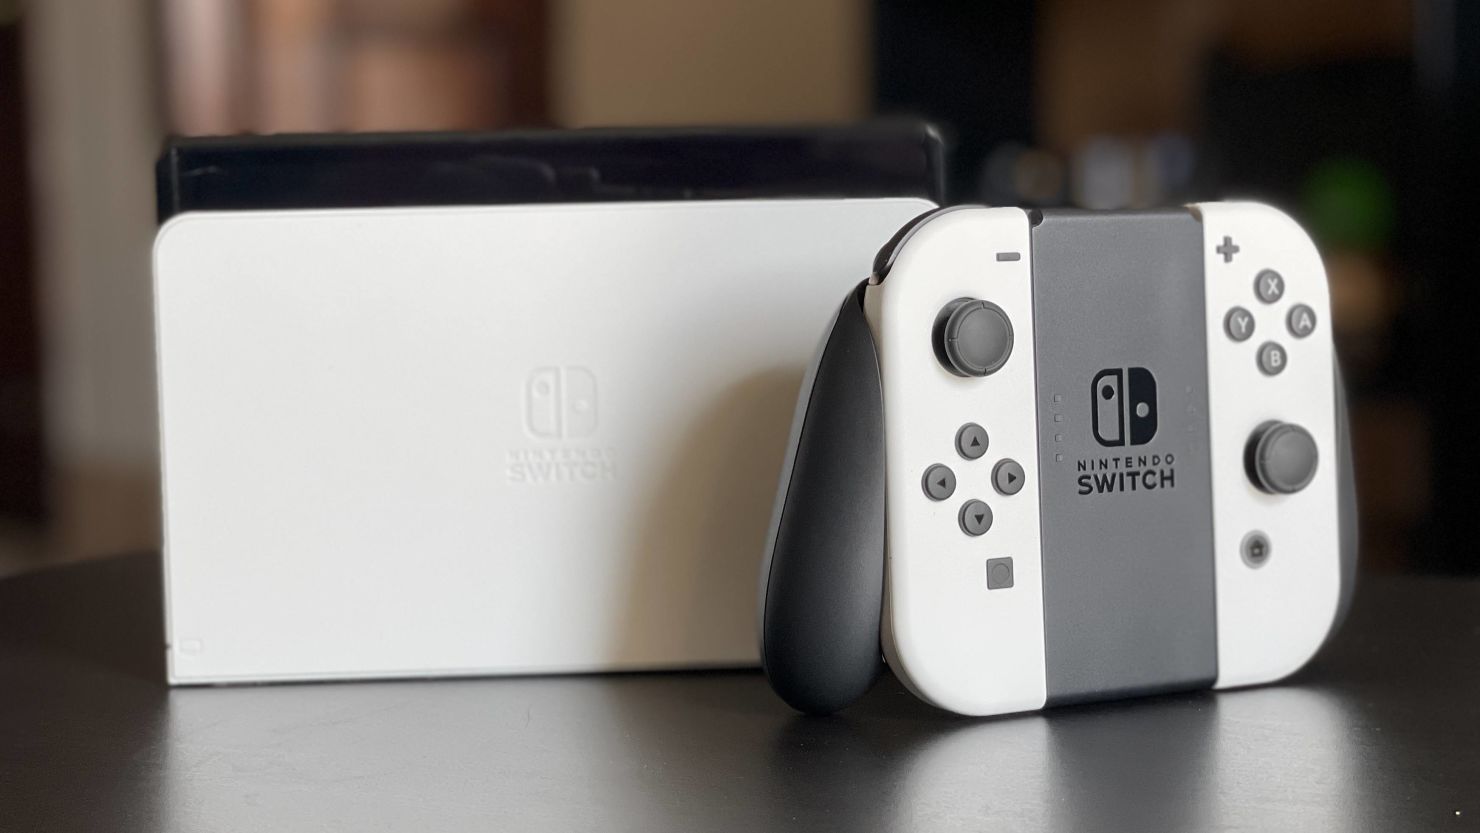 Console Nintendo Switch Oled com Joy-Con